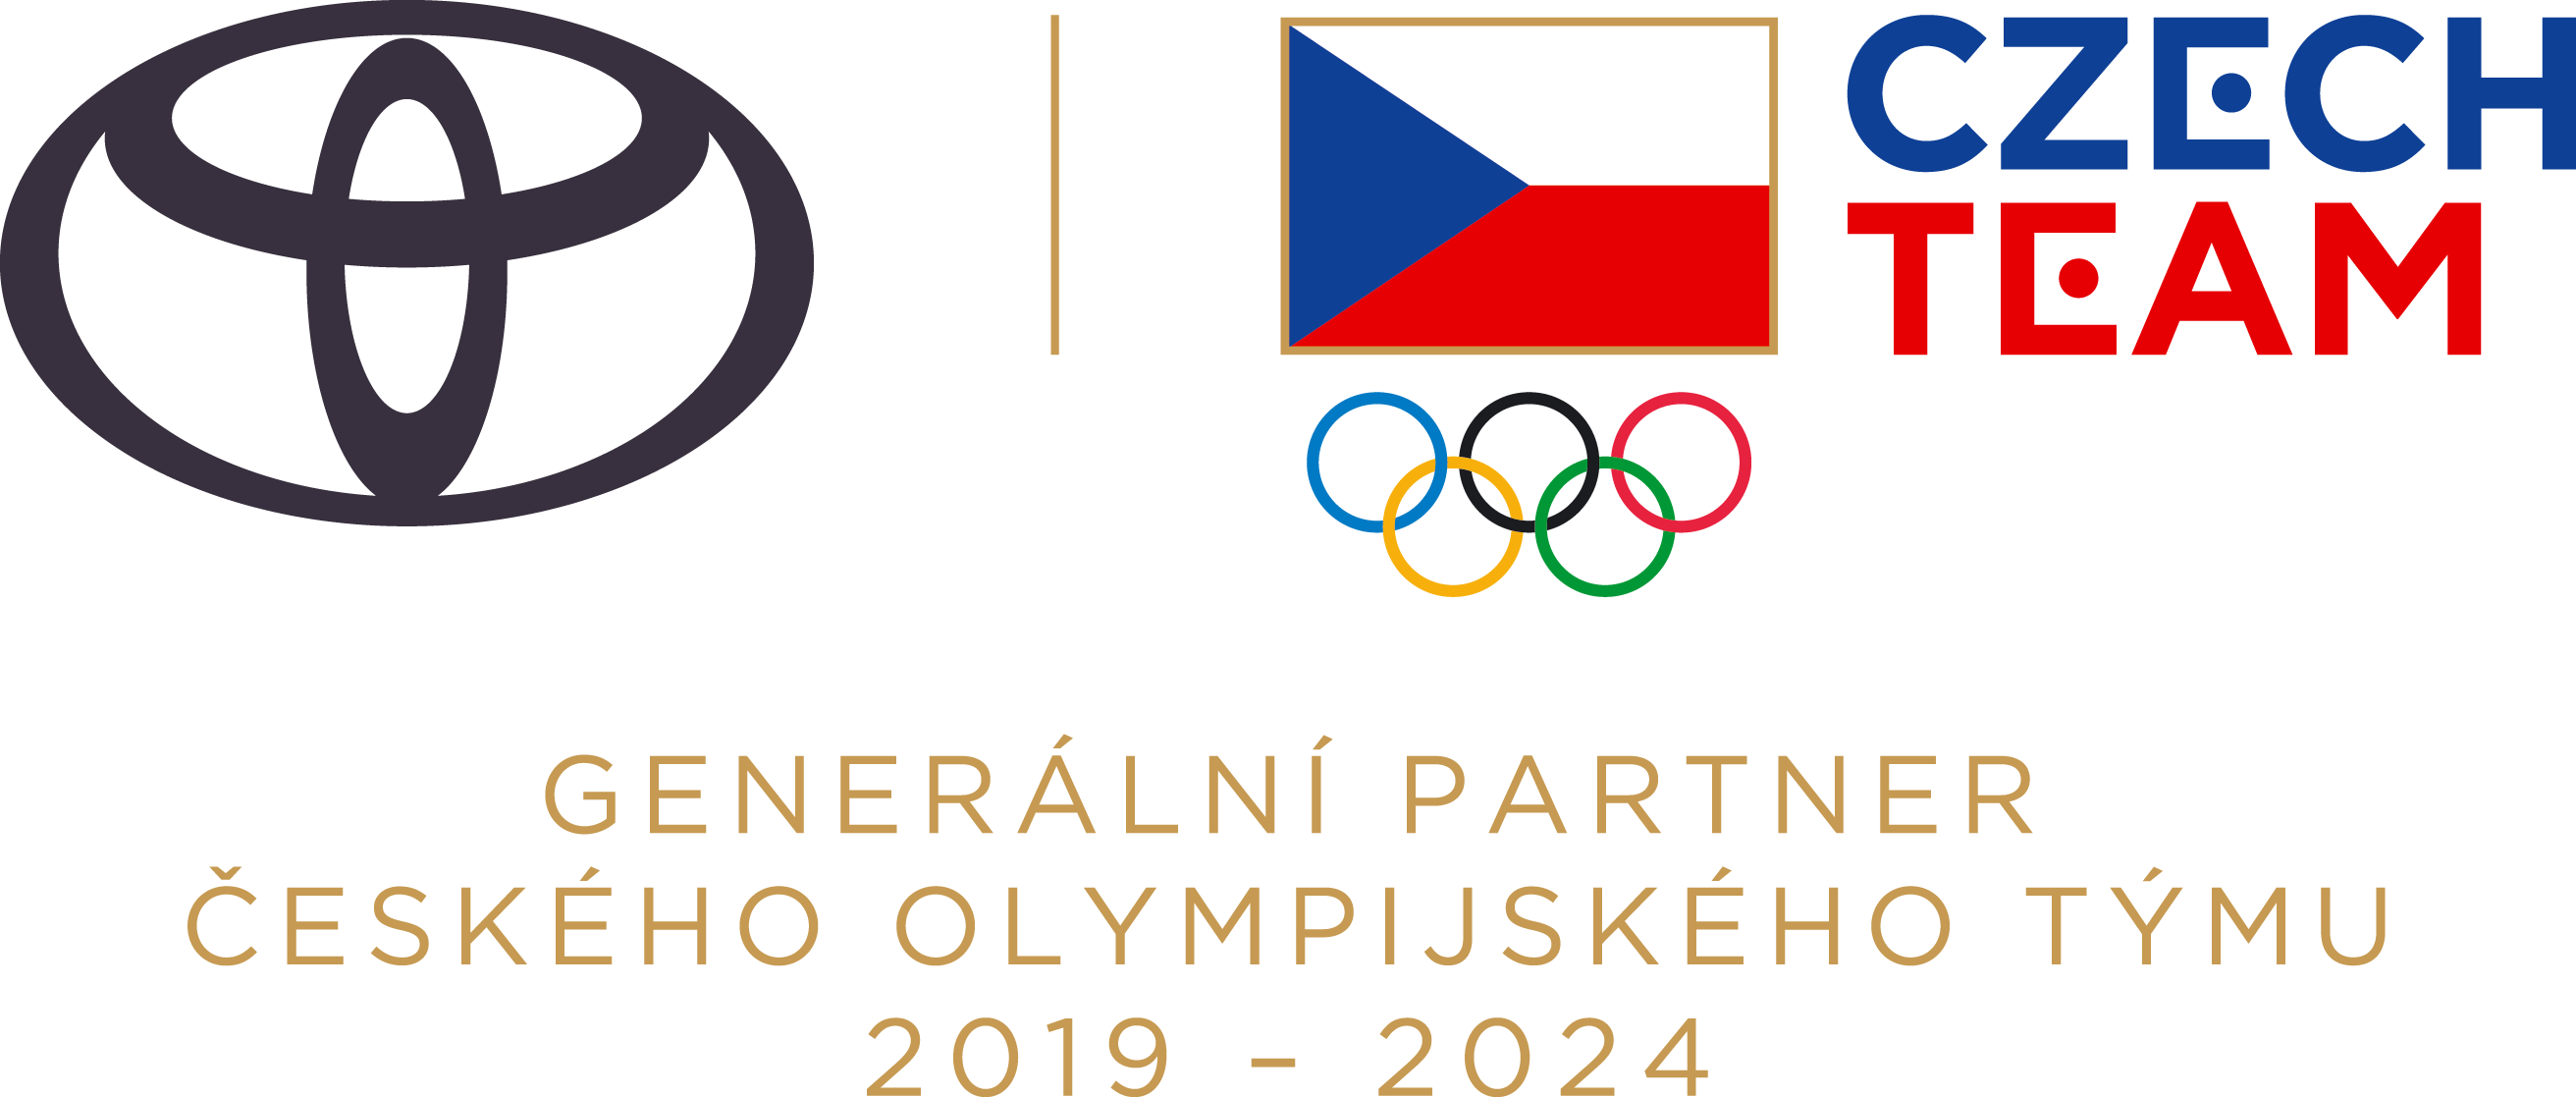 Toyota + Olympic logo